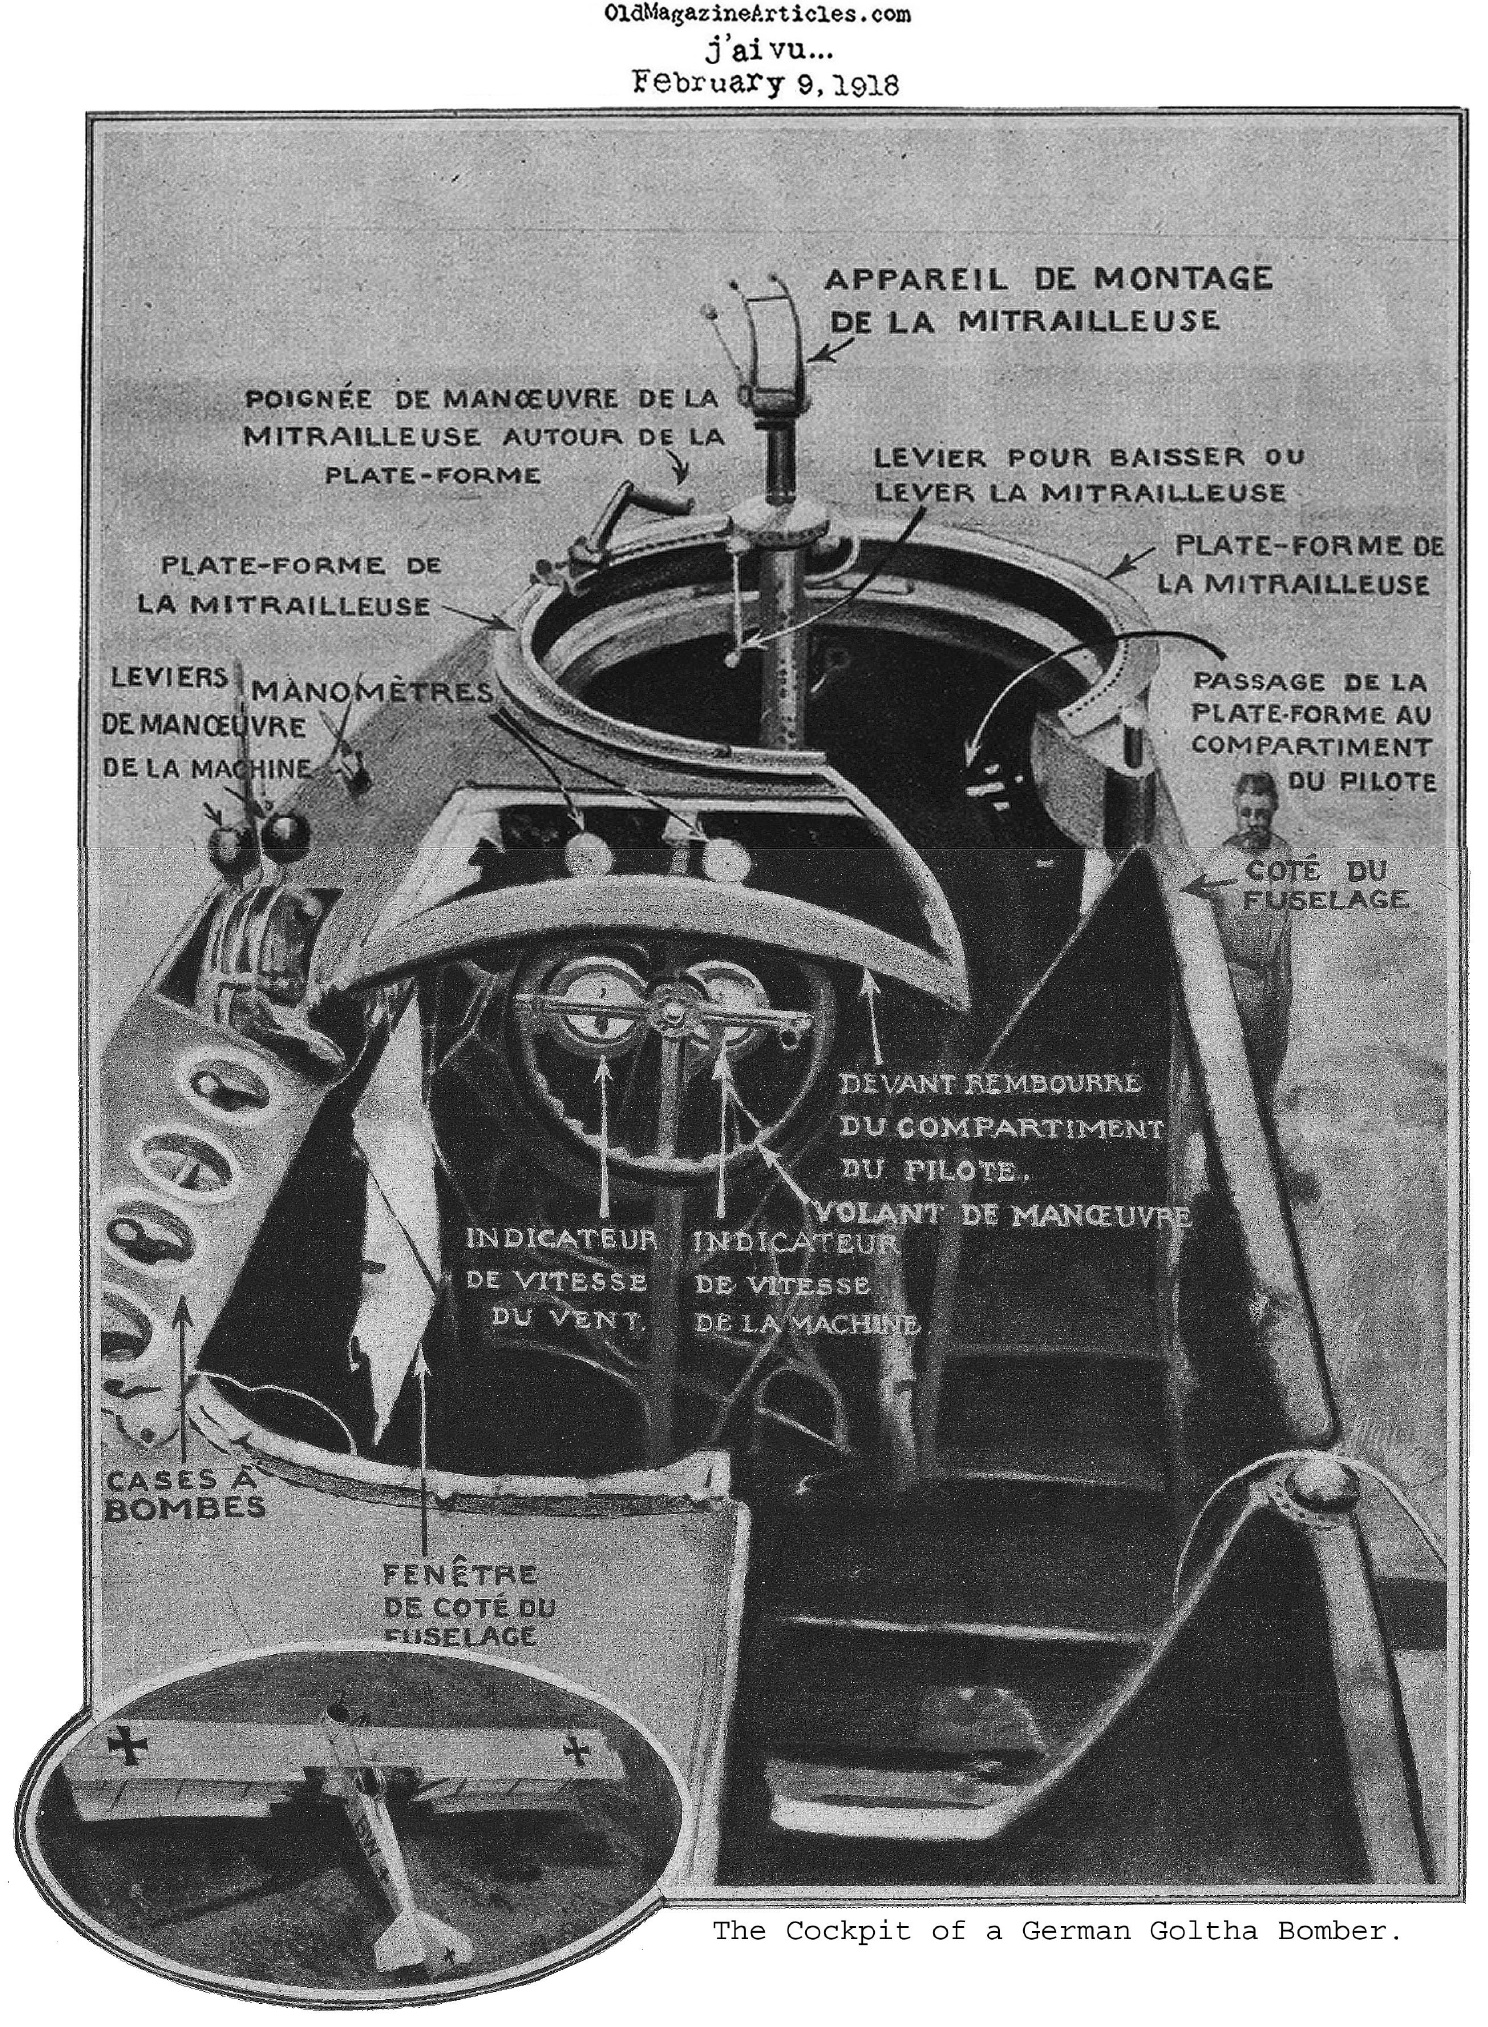 Cockpit of the  Giant Goltha Bomber (j'ai vu Magazine, 1918)